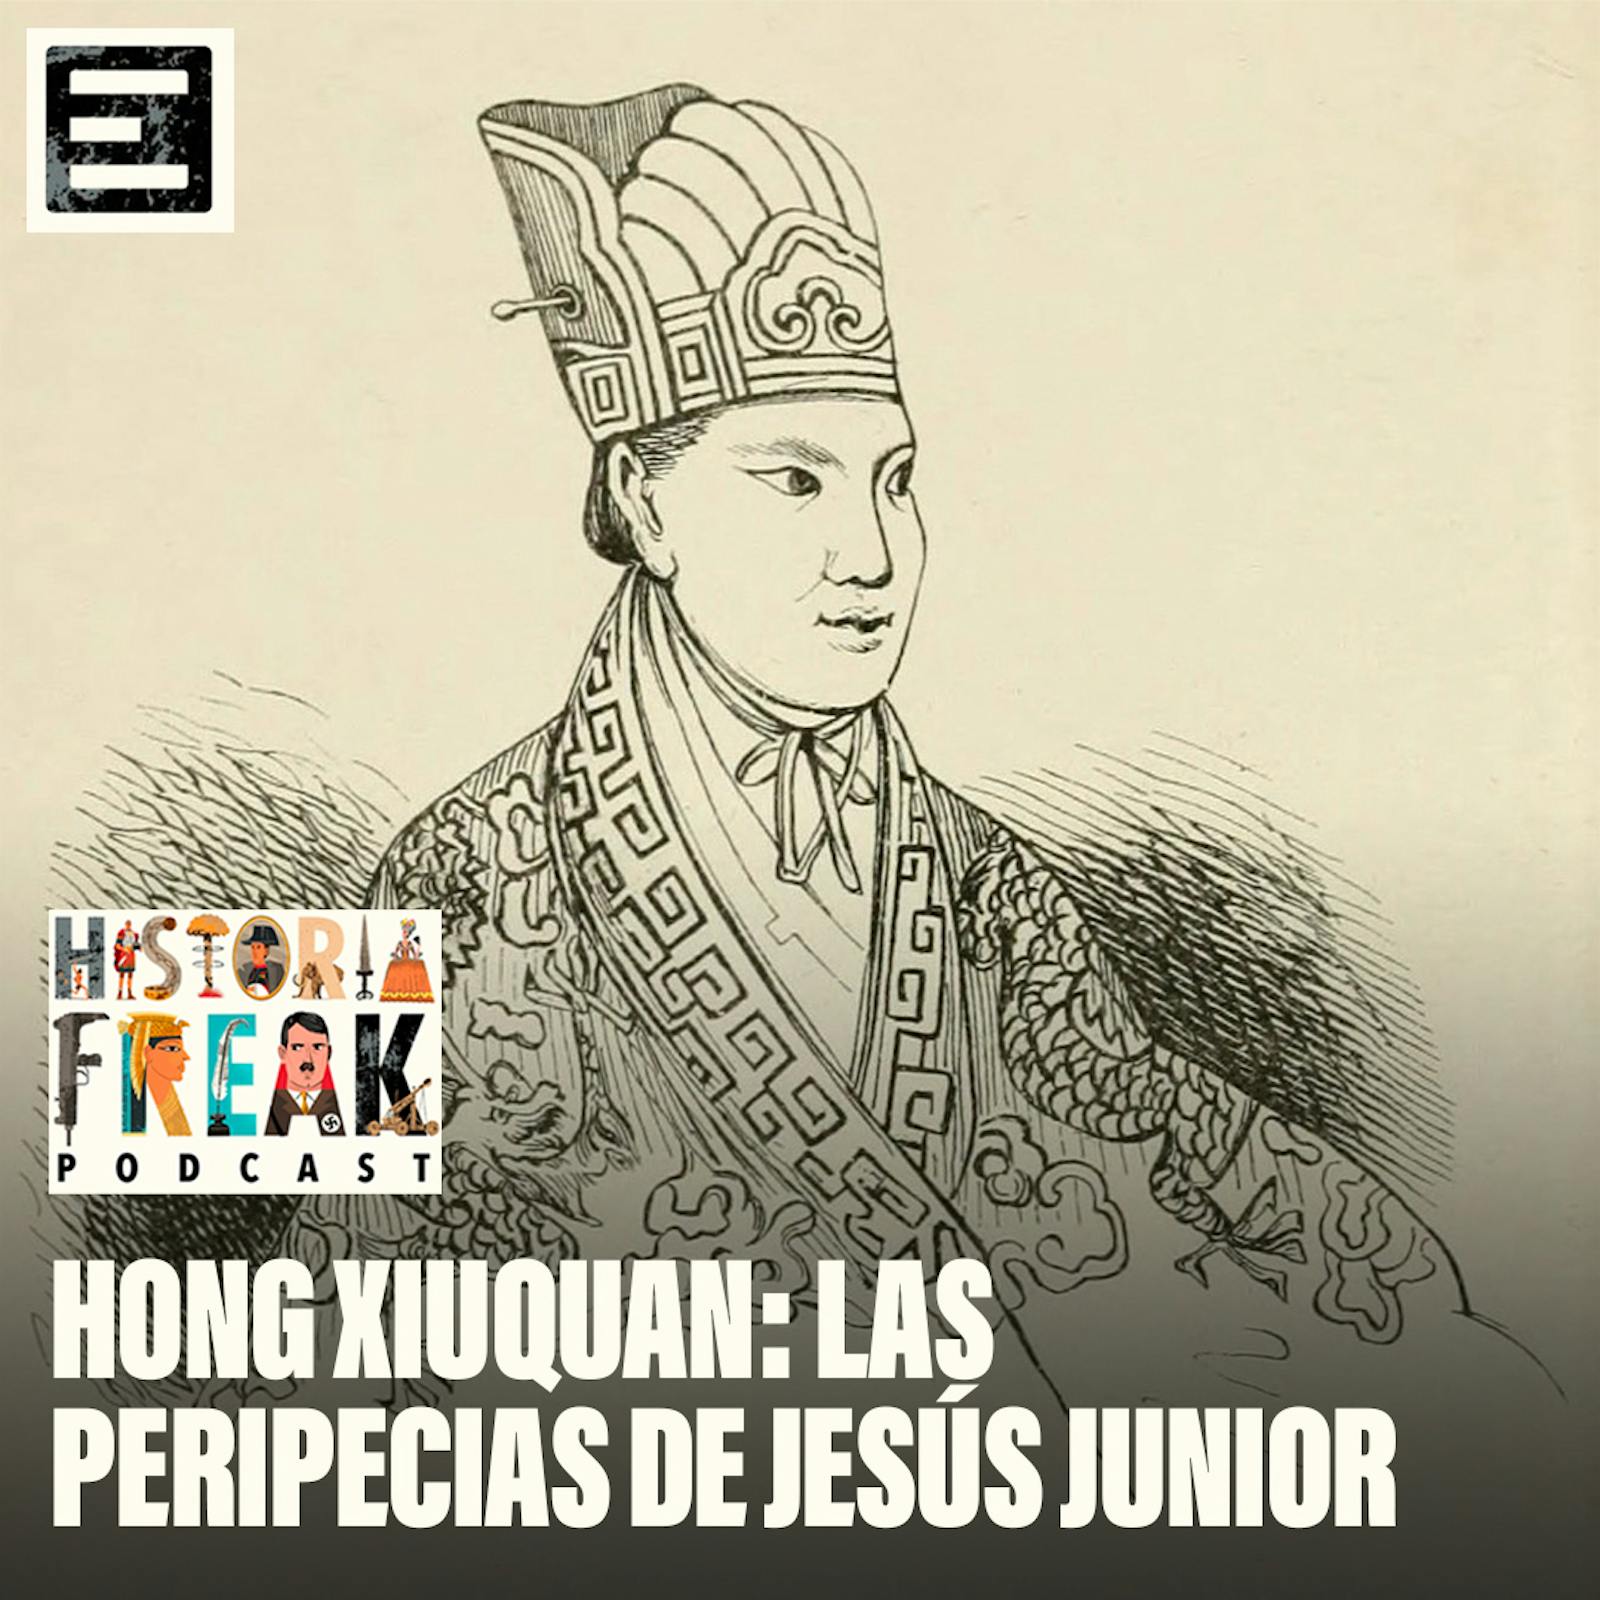 Hong Xiuquan: Las peripecias de Jesús Junior